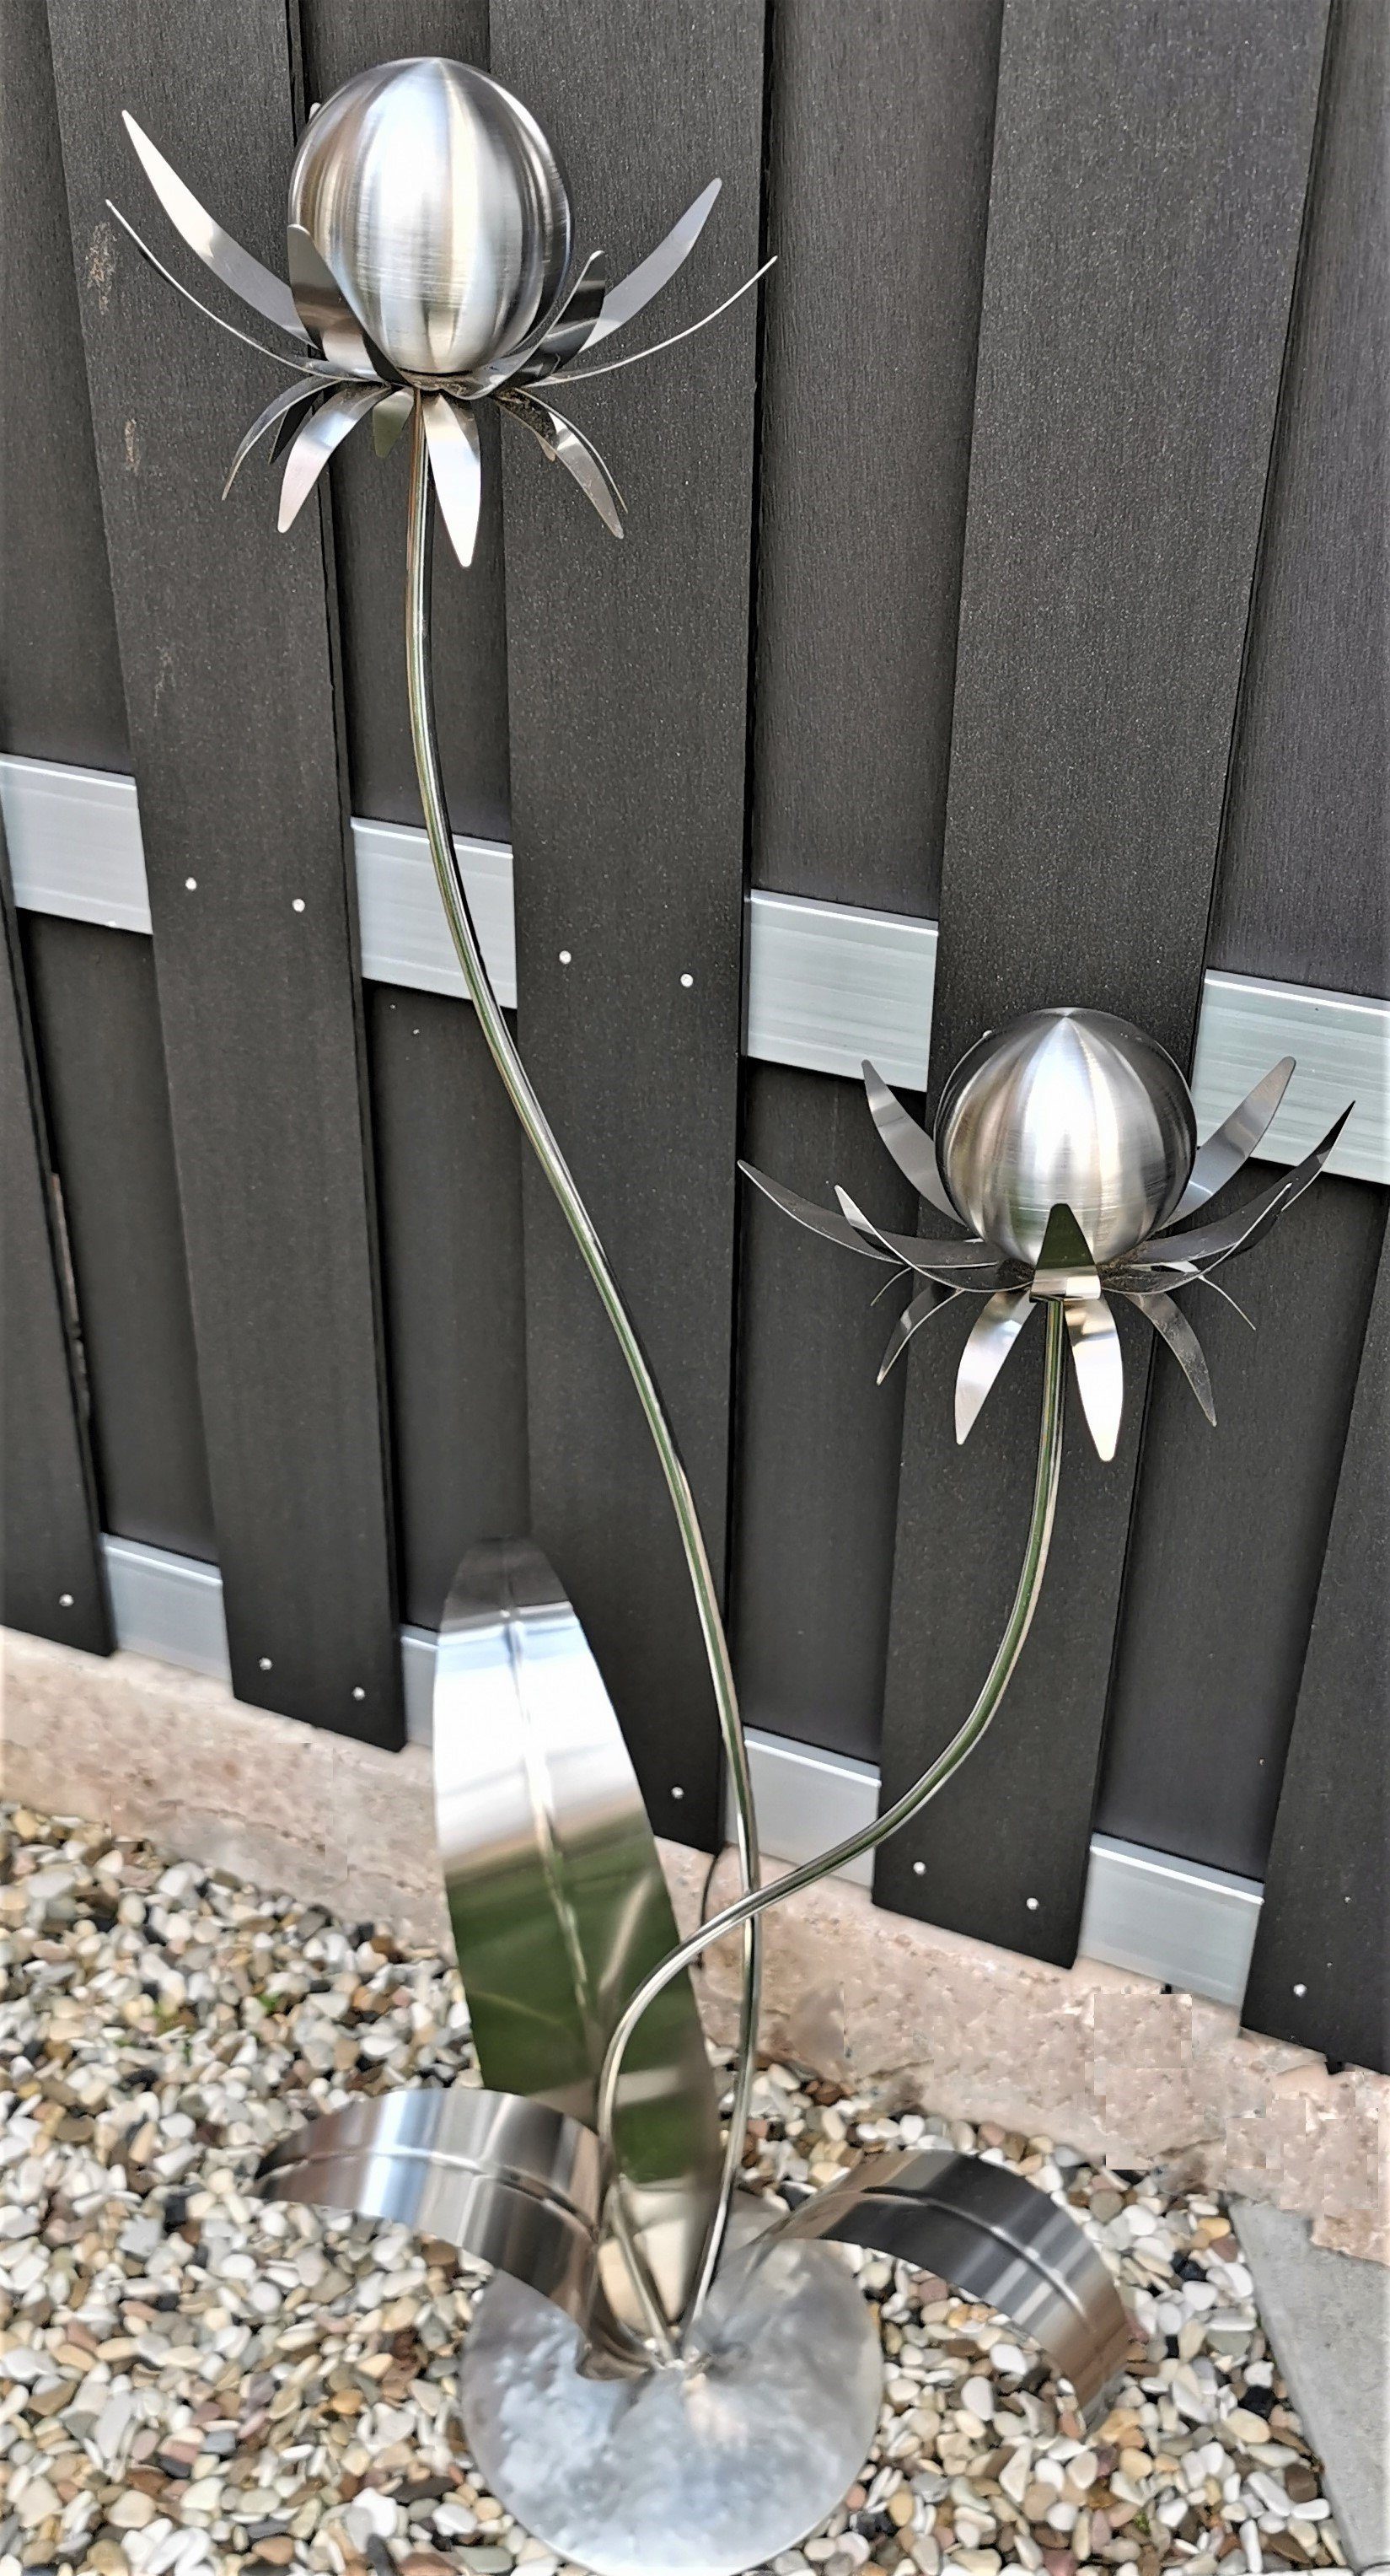 Jürgen Bocker Garten-Ambiente Gartenstecker Skulptur Blume Milano Edelstahl 120 cm Kugel Edelstahl matt gebürstet mit Standfuß Deko Gartendeko